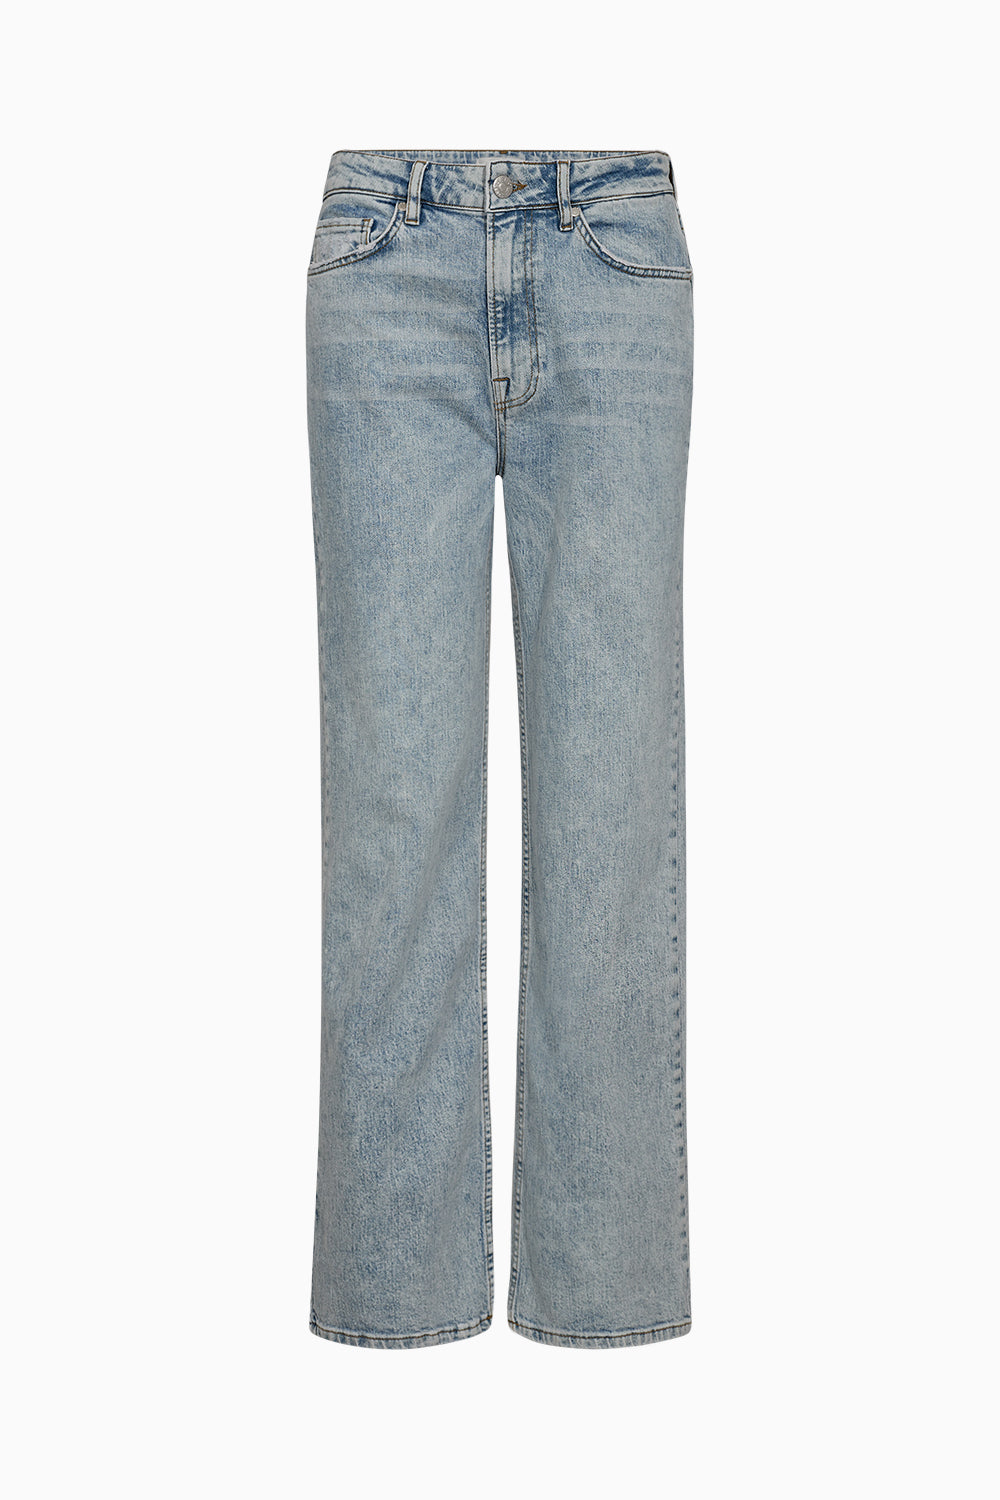 Tomorrow TRW-Brown Jeans Wash Merida Jeans & Pants 51 Denim Blue